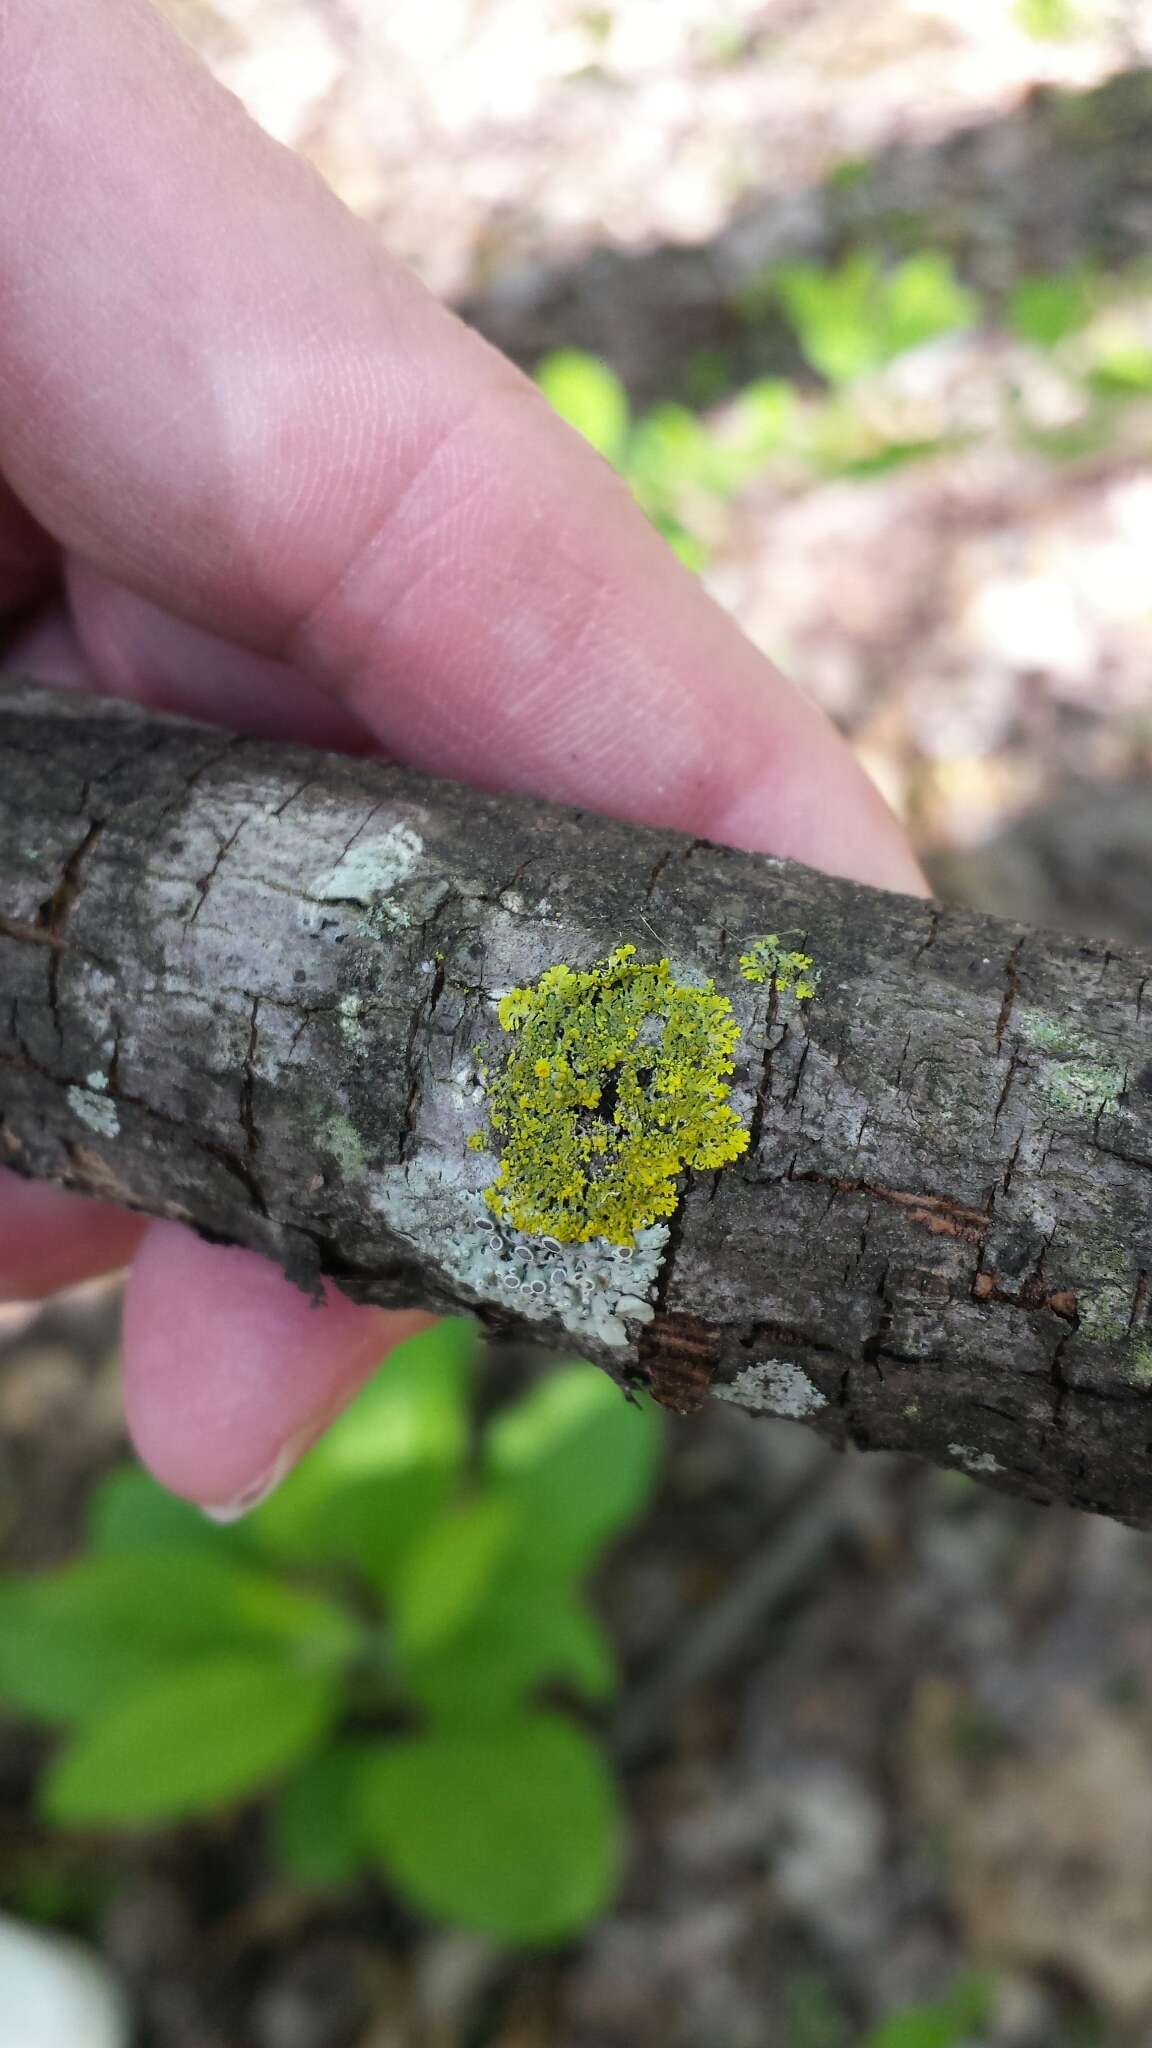 Image of Fringed candleflame lichen;   Lemon lichen